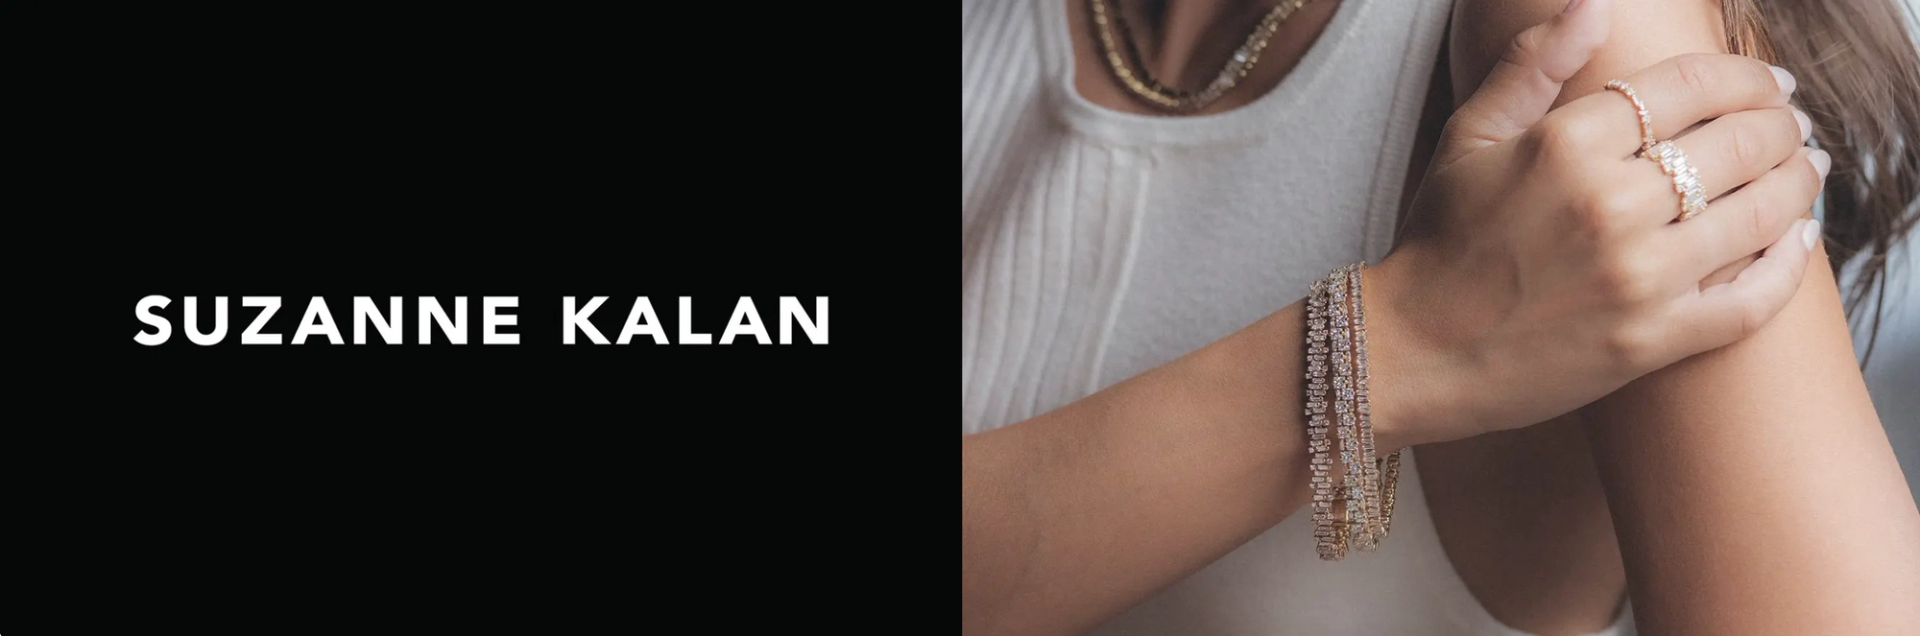 Suzanne Kalan's brand